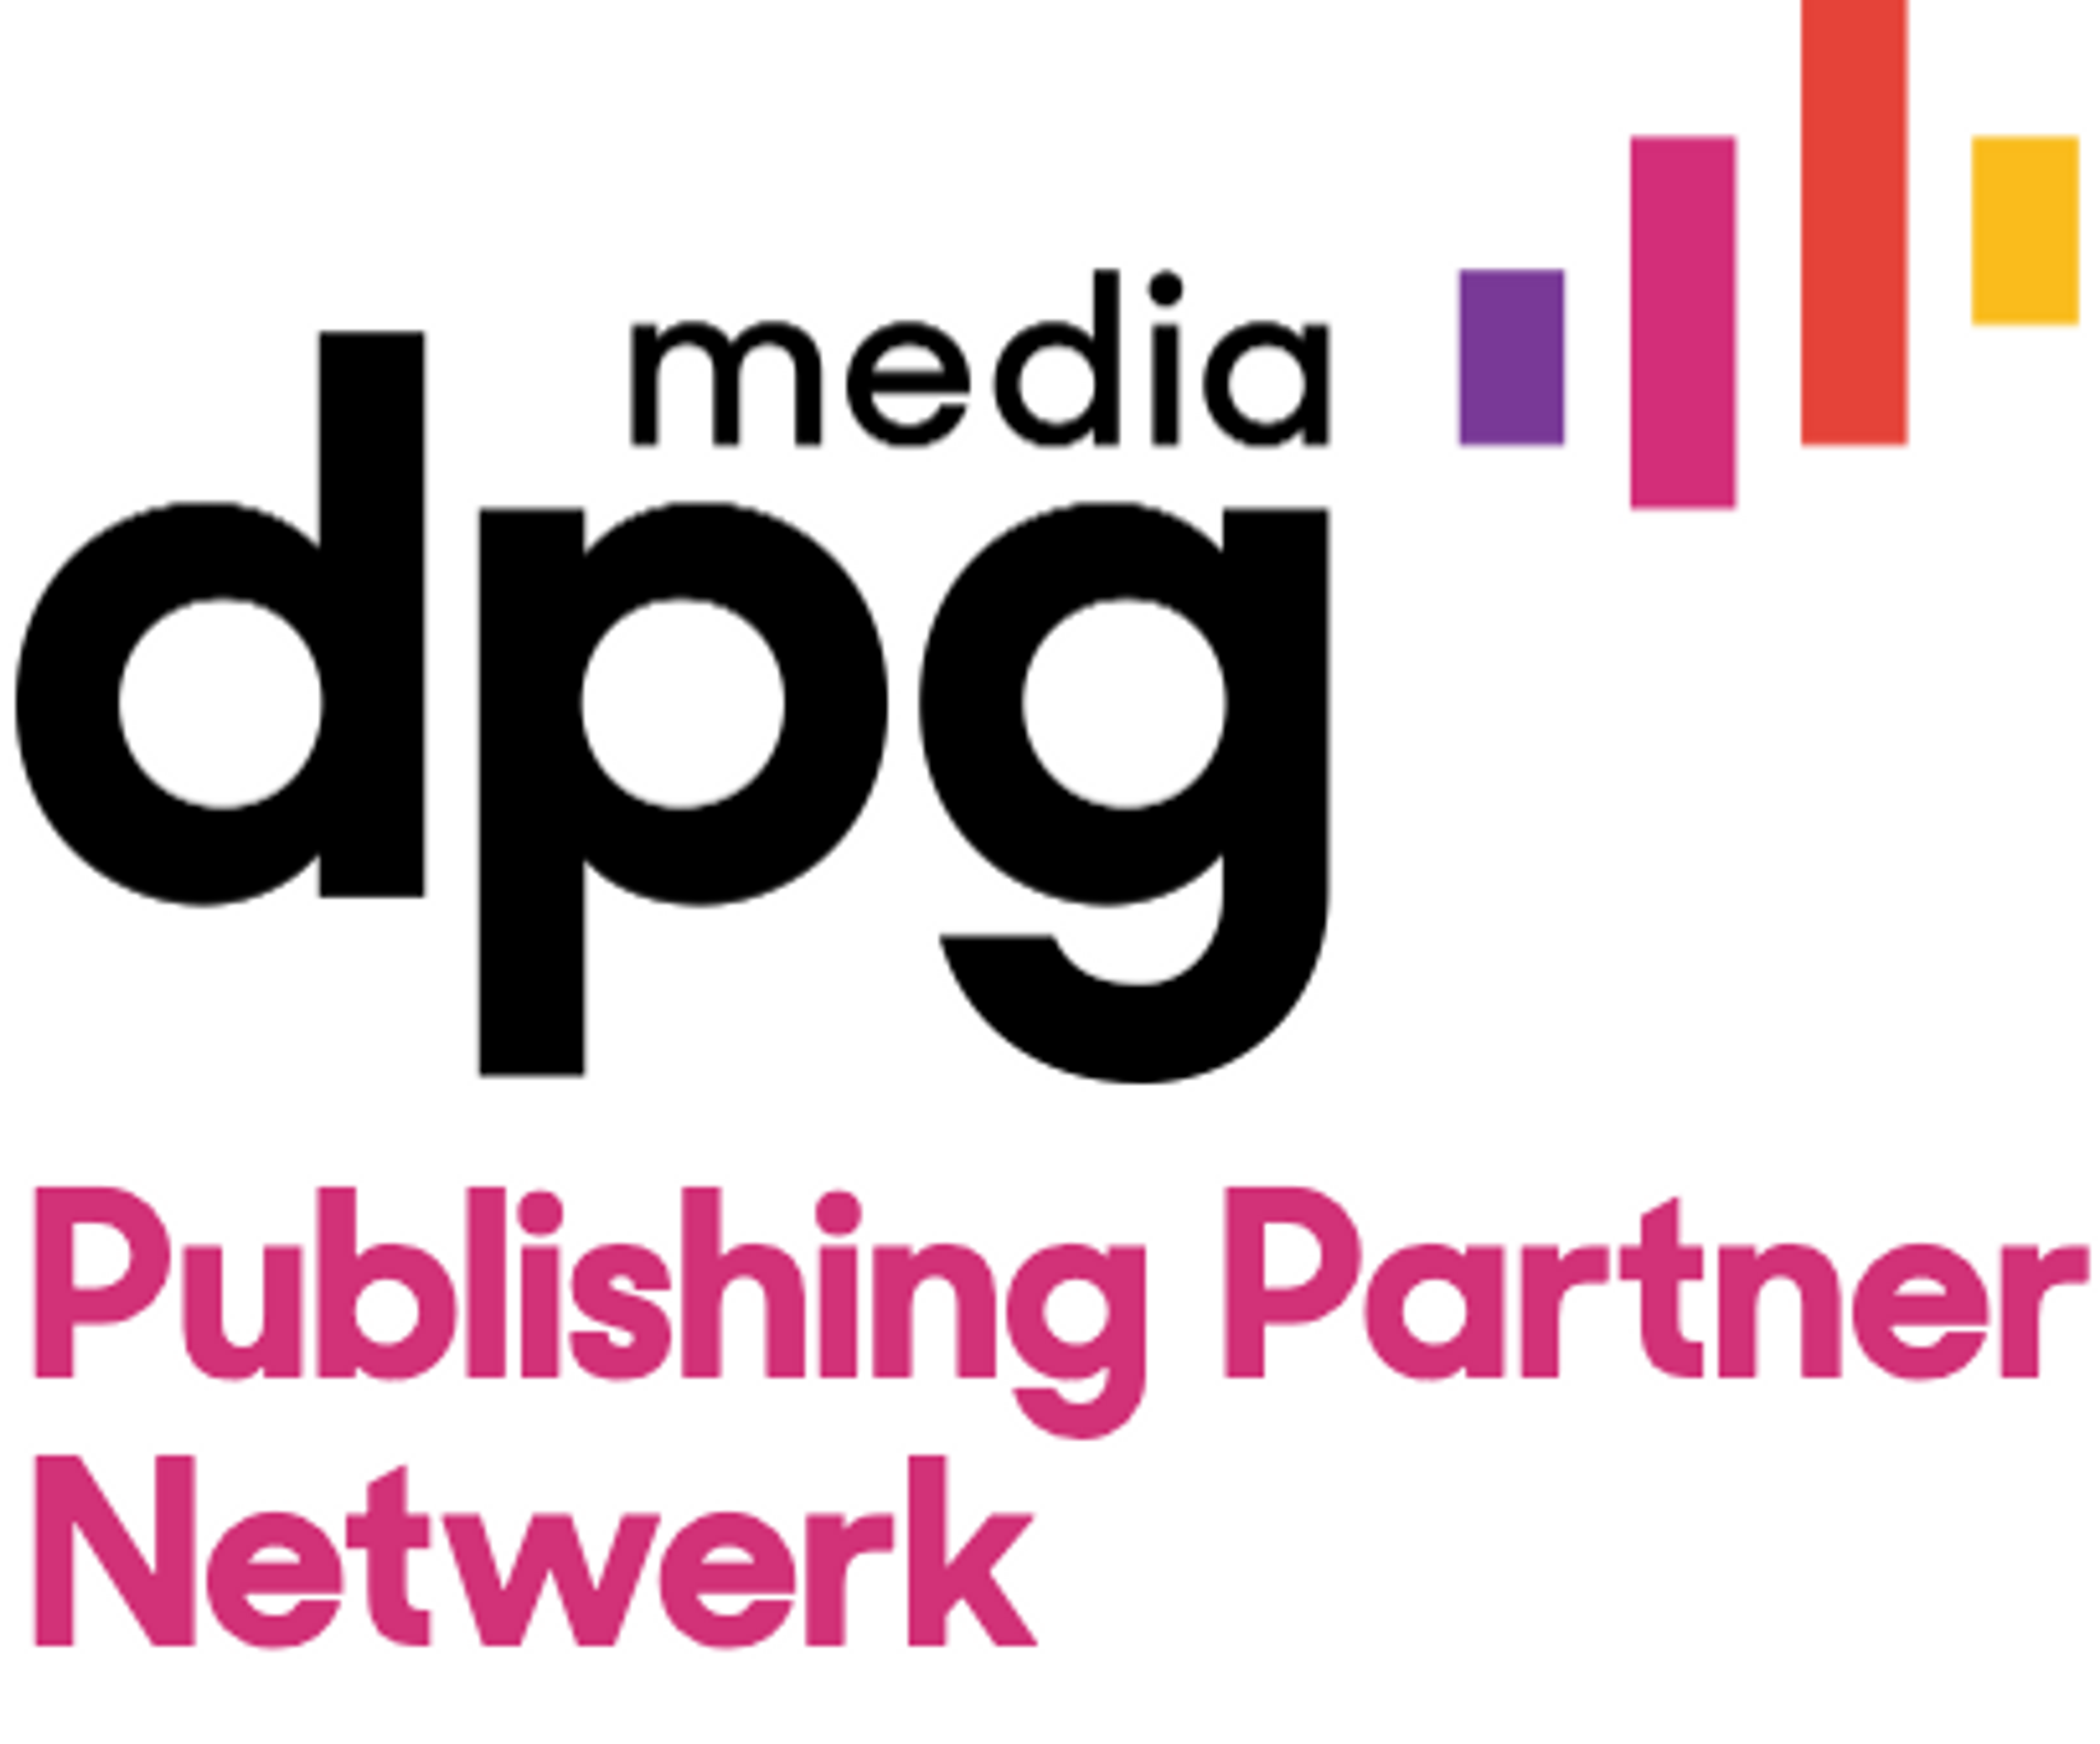 Nieuwe titels toegevoegd aan het Publishing Partner Netwerk van DPG Media